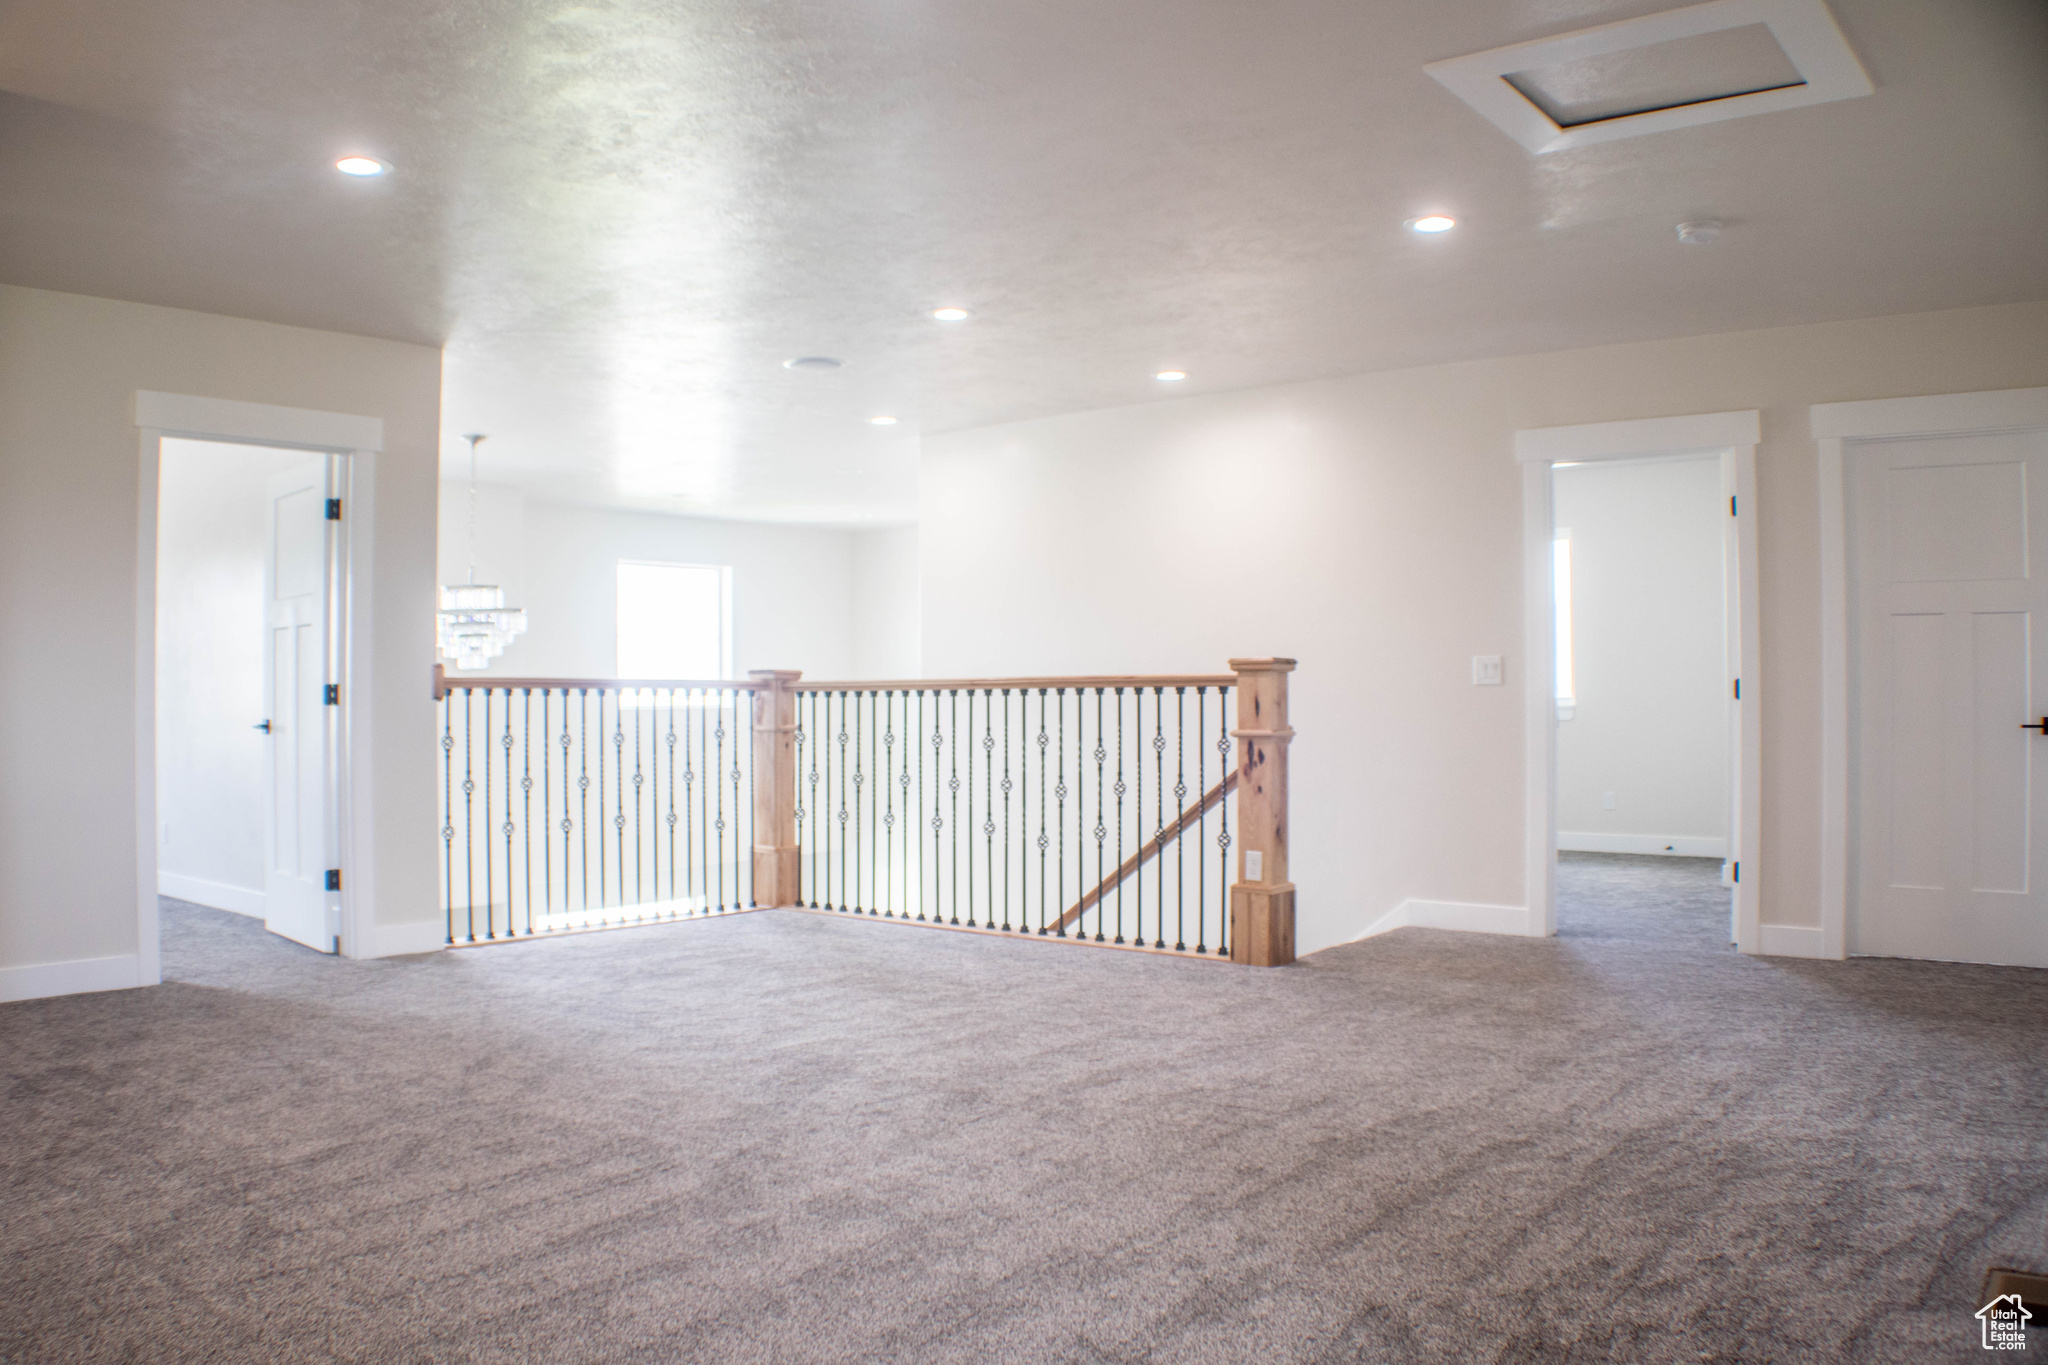 Spare room featuring carpet floors